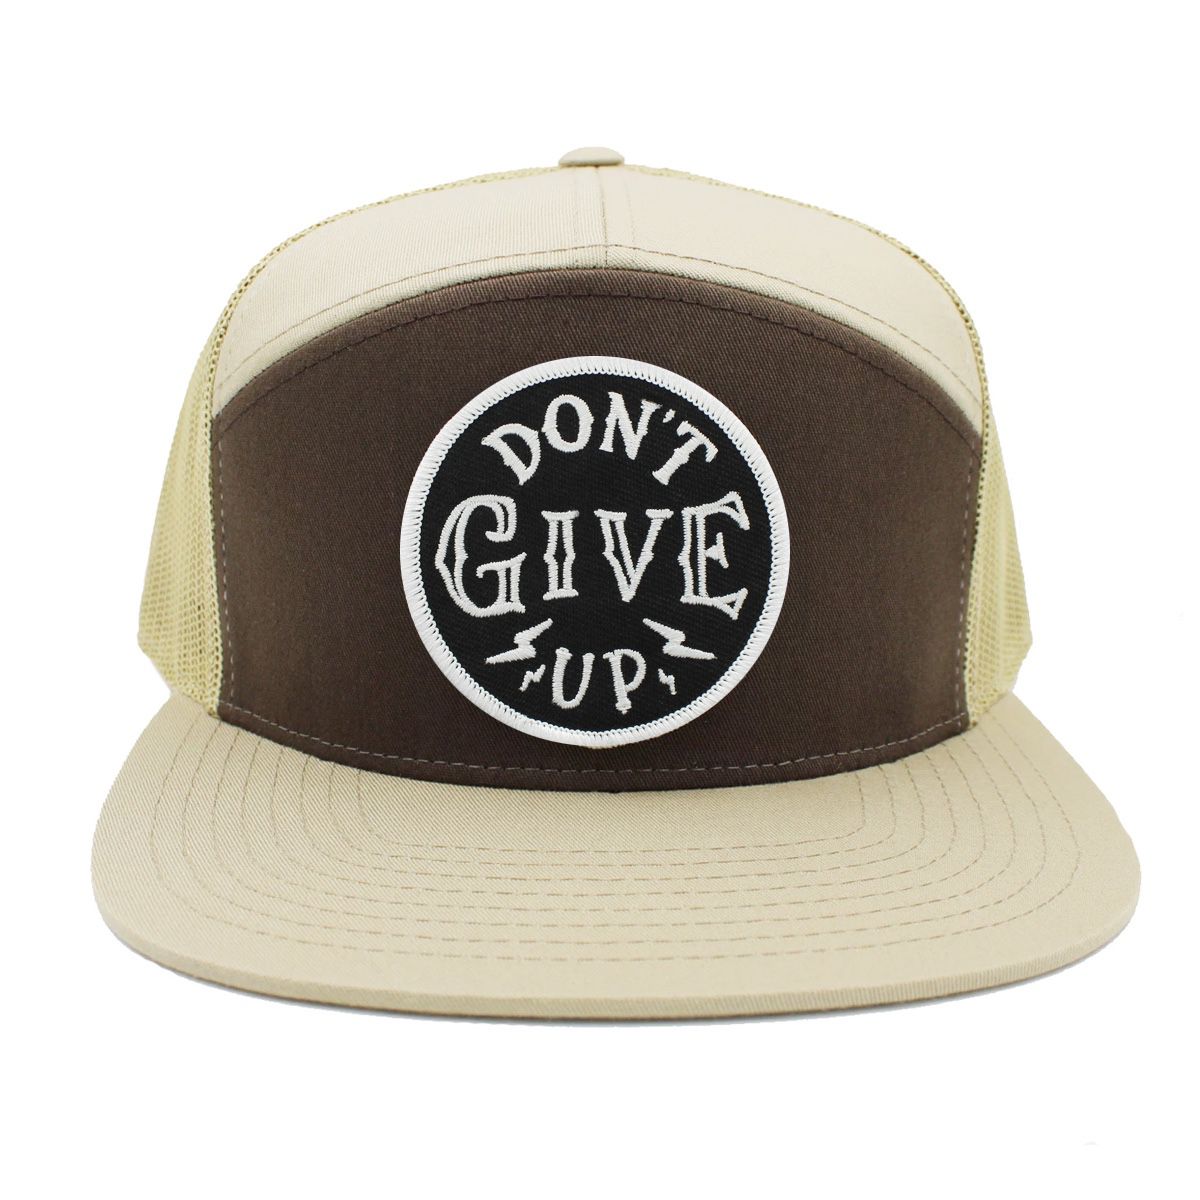 Any cap $19.99 don’t give up trucker hat SnapBack